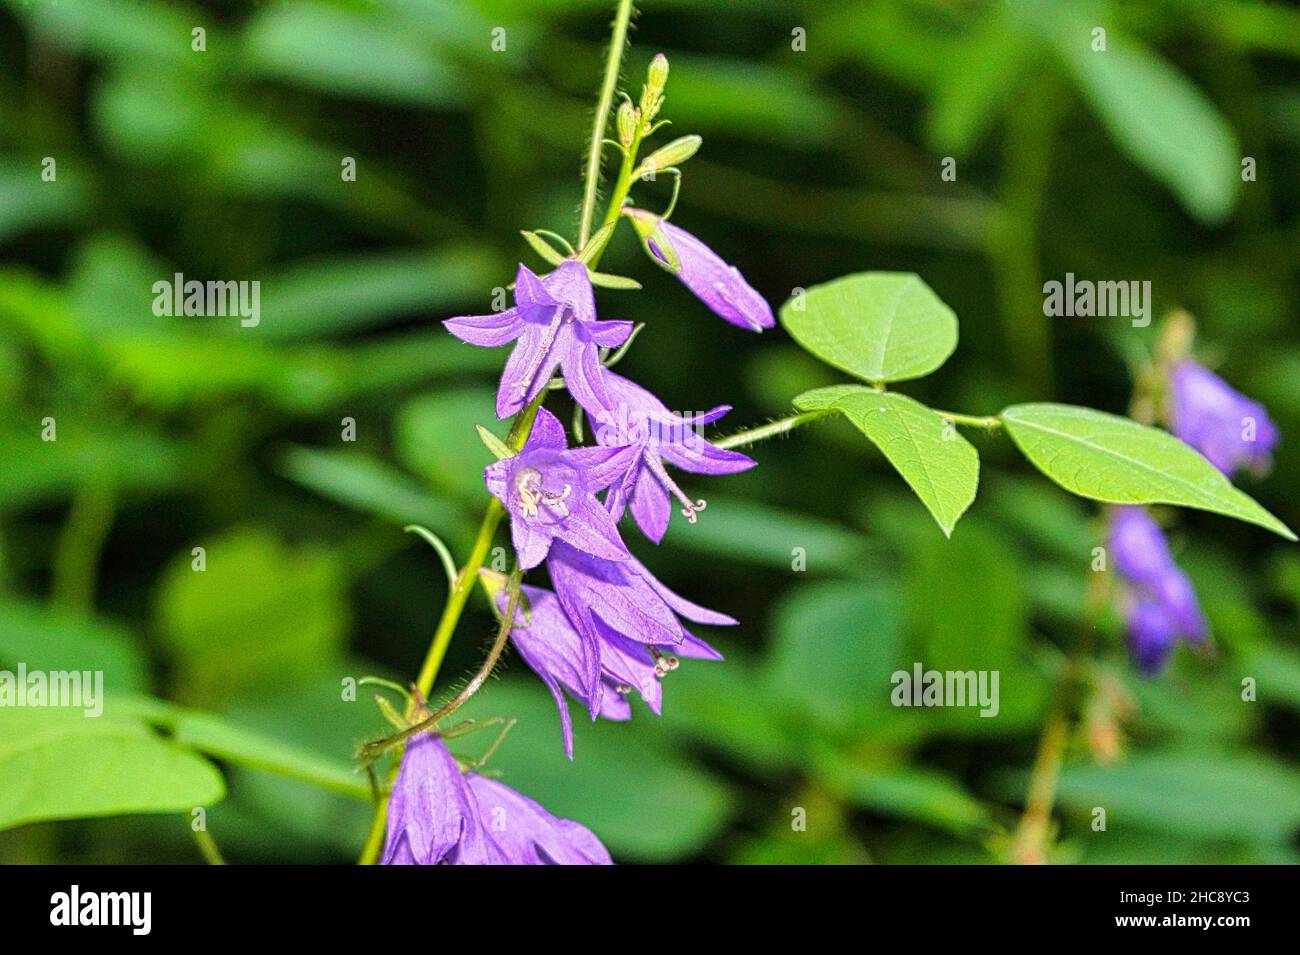 Closeup shot of a purple creeping bellflower or Campanula rapunculoides flower in the garden Stock Photo